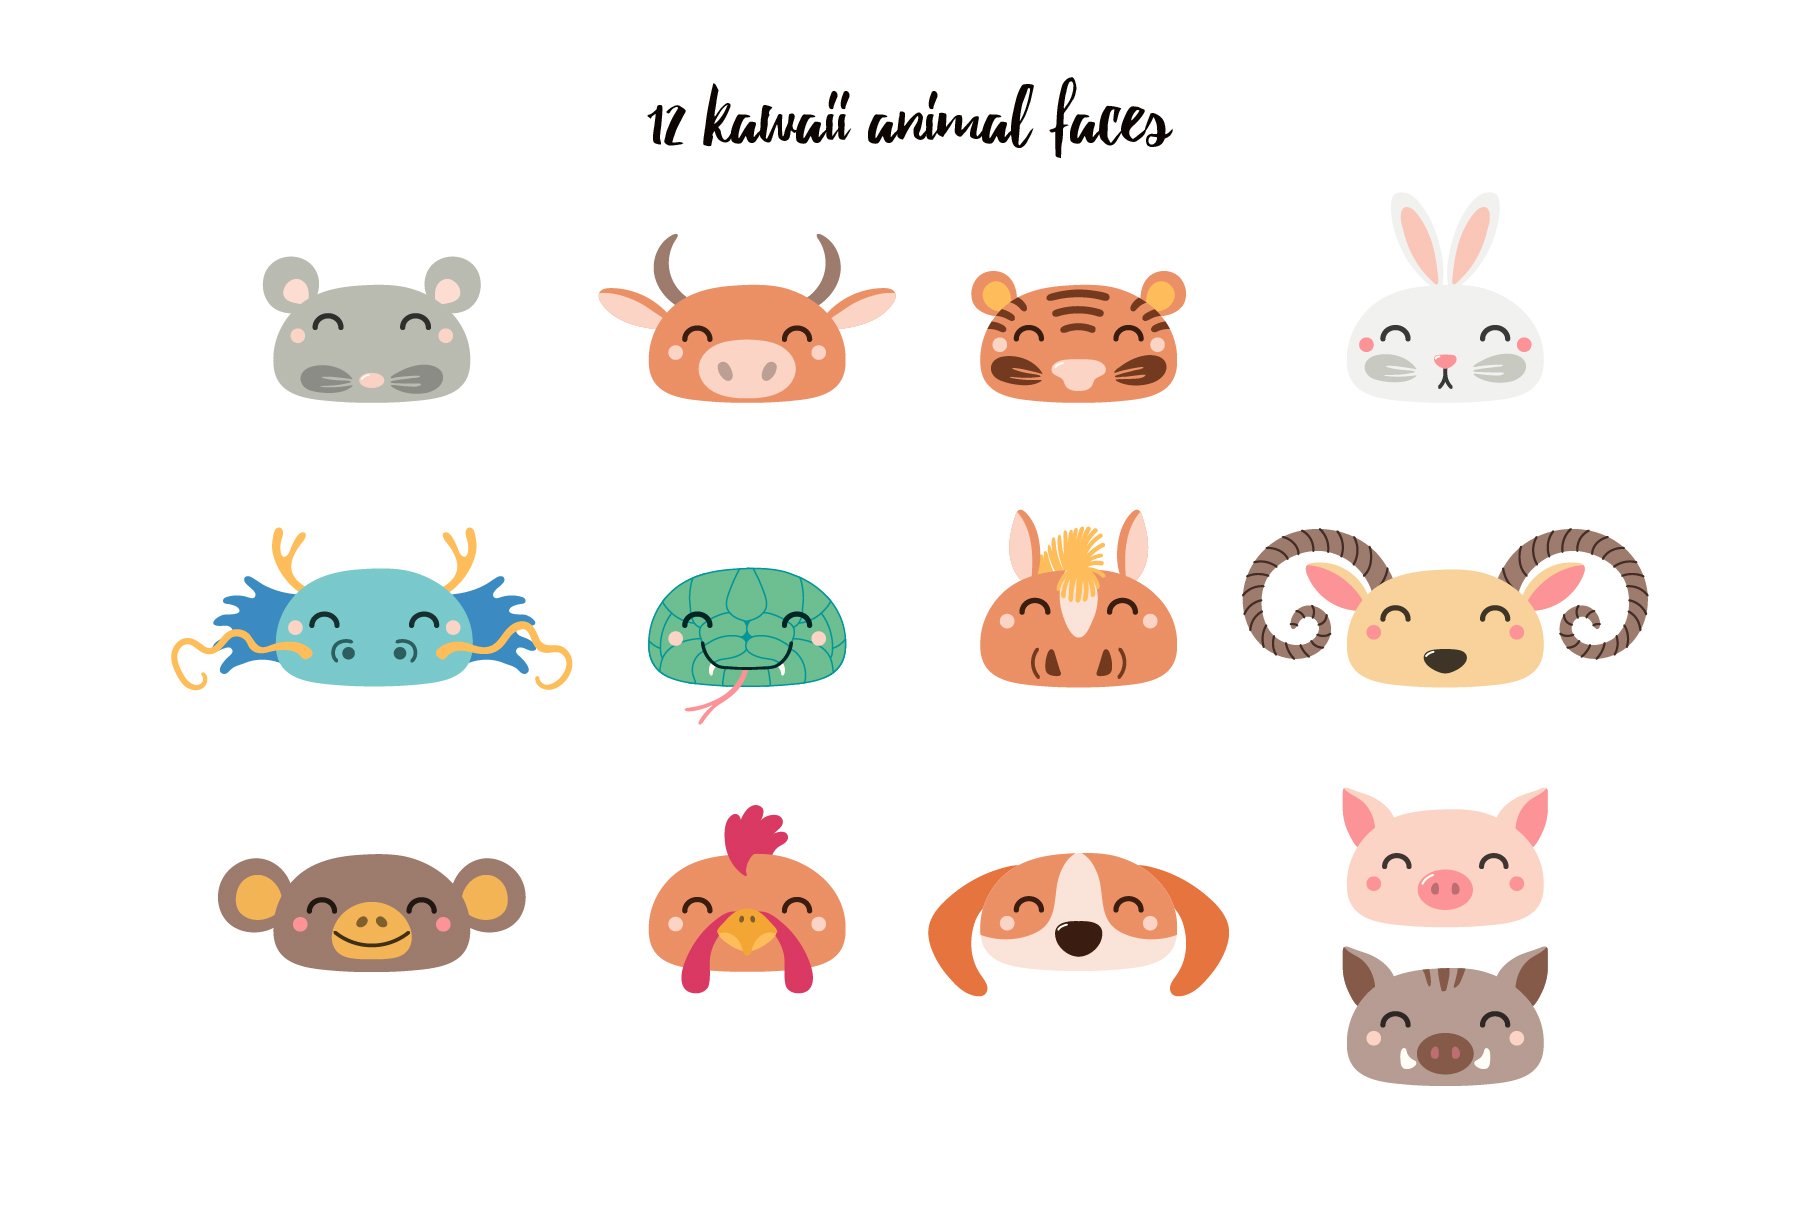 Cute kawaii animal faces.